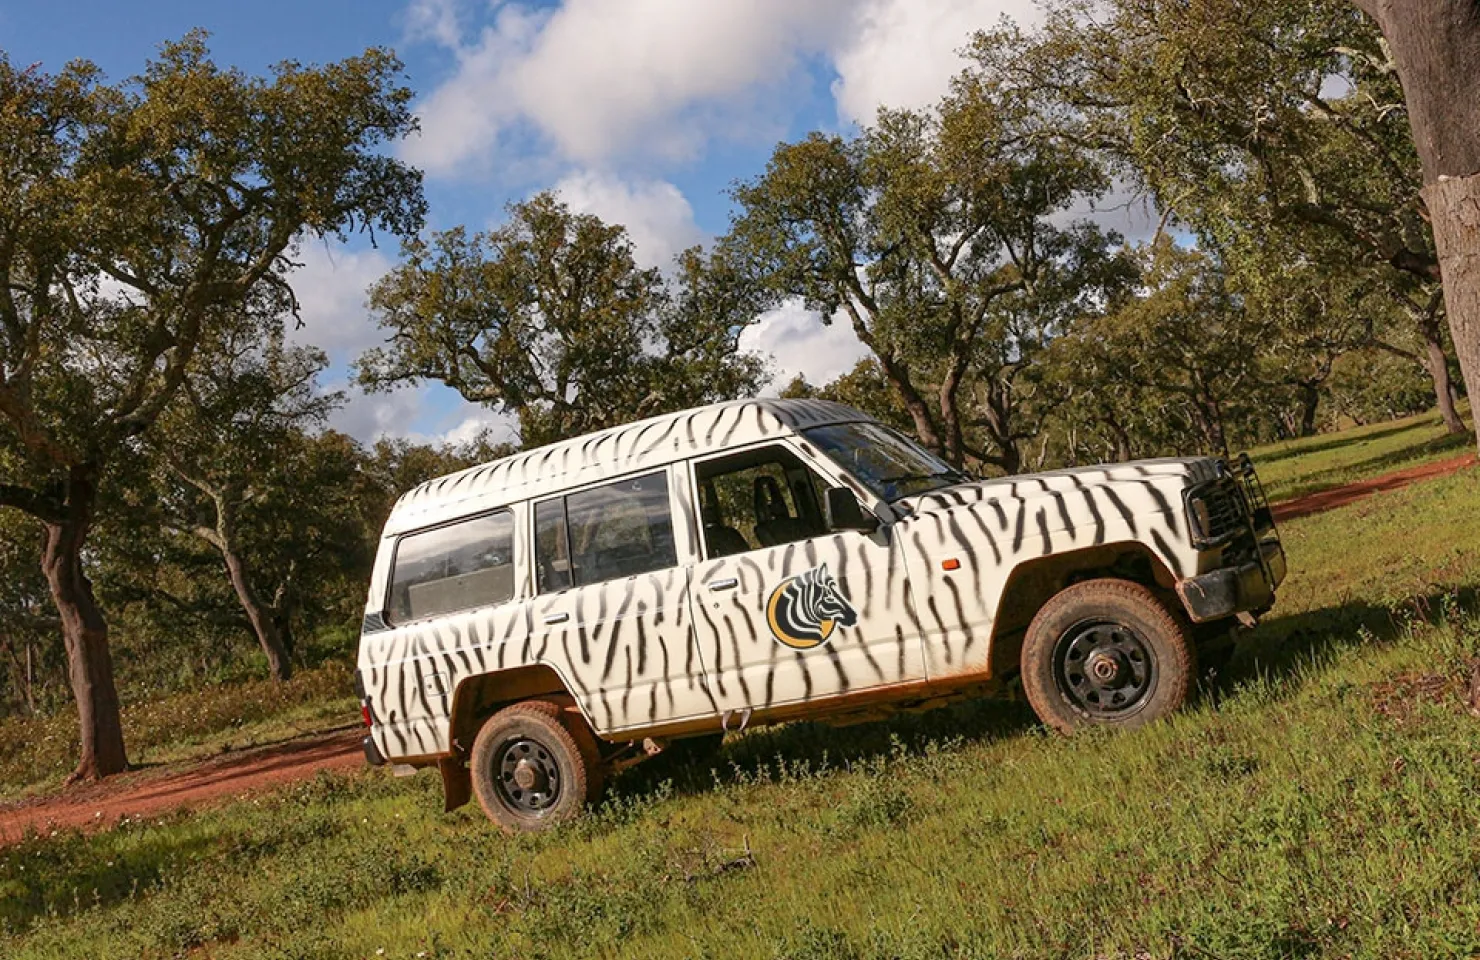 Full-Day Jeep Safari Adventure by Zebra Safari - Things to do In Albufeira